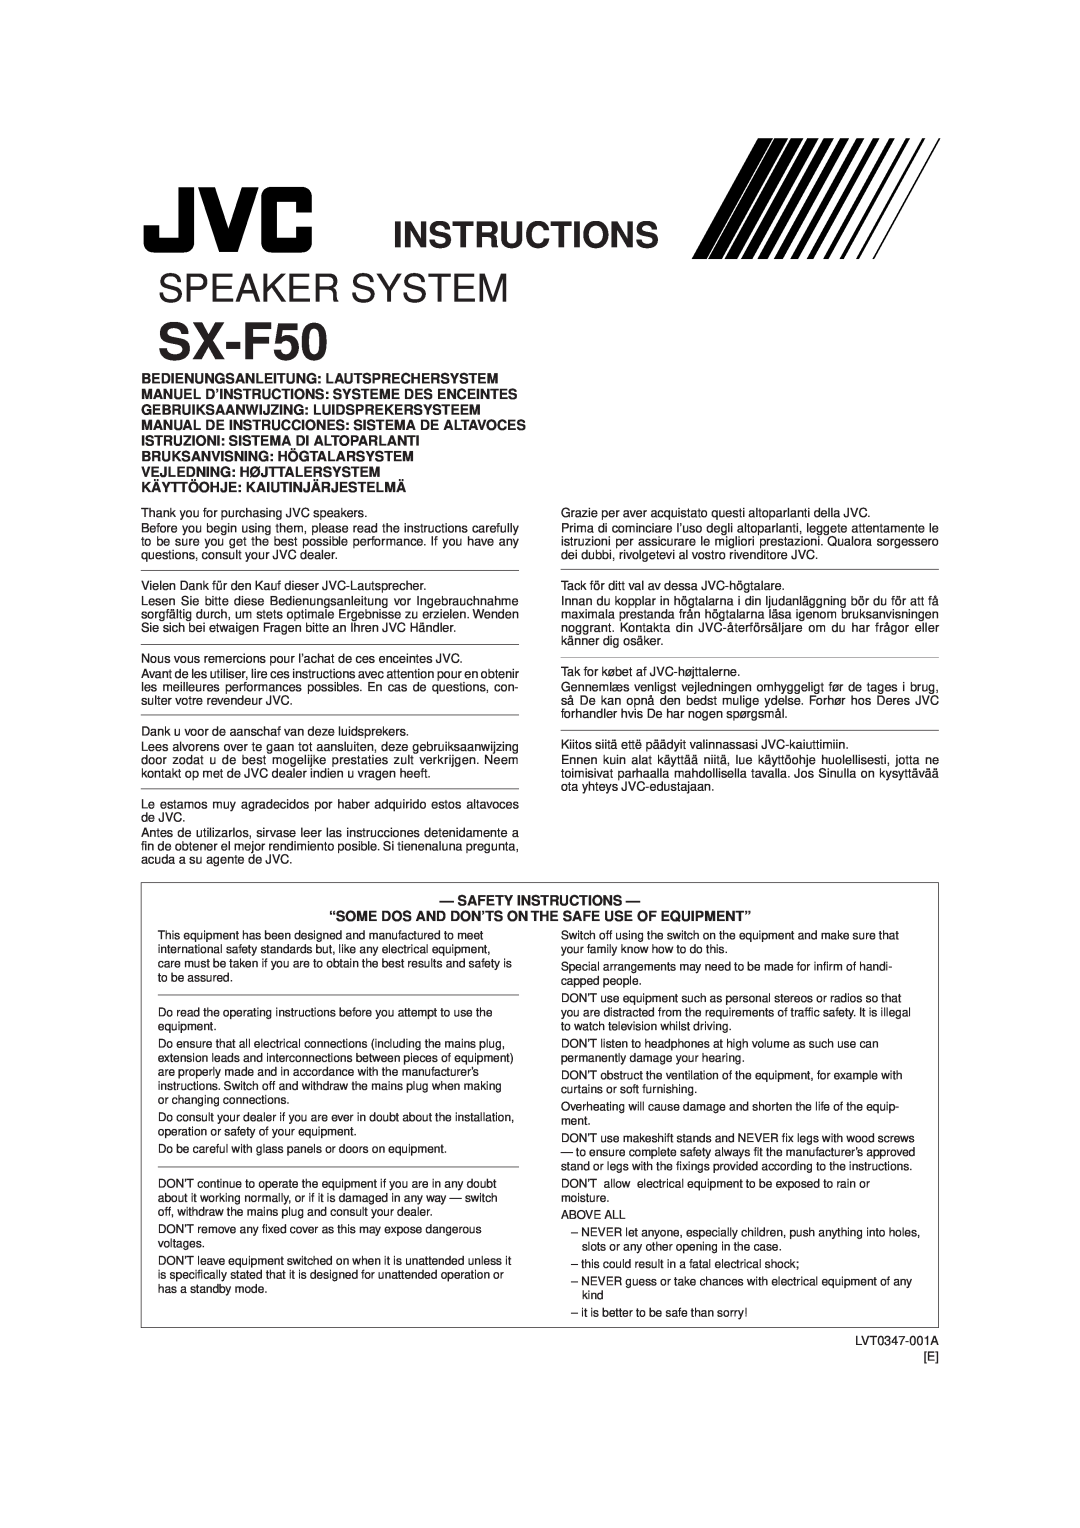 JVC SX-F50, LVT0347-001A manual Speaker System, Instructions 